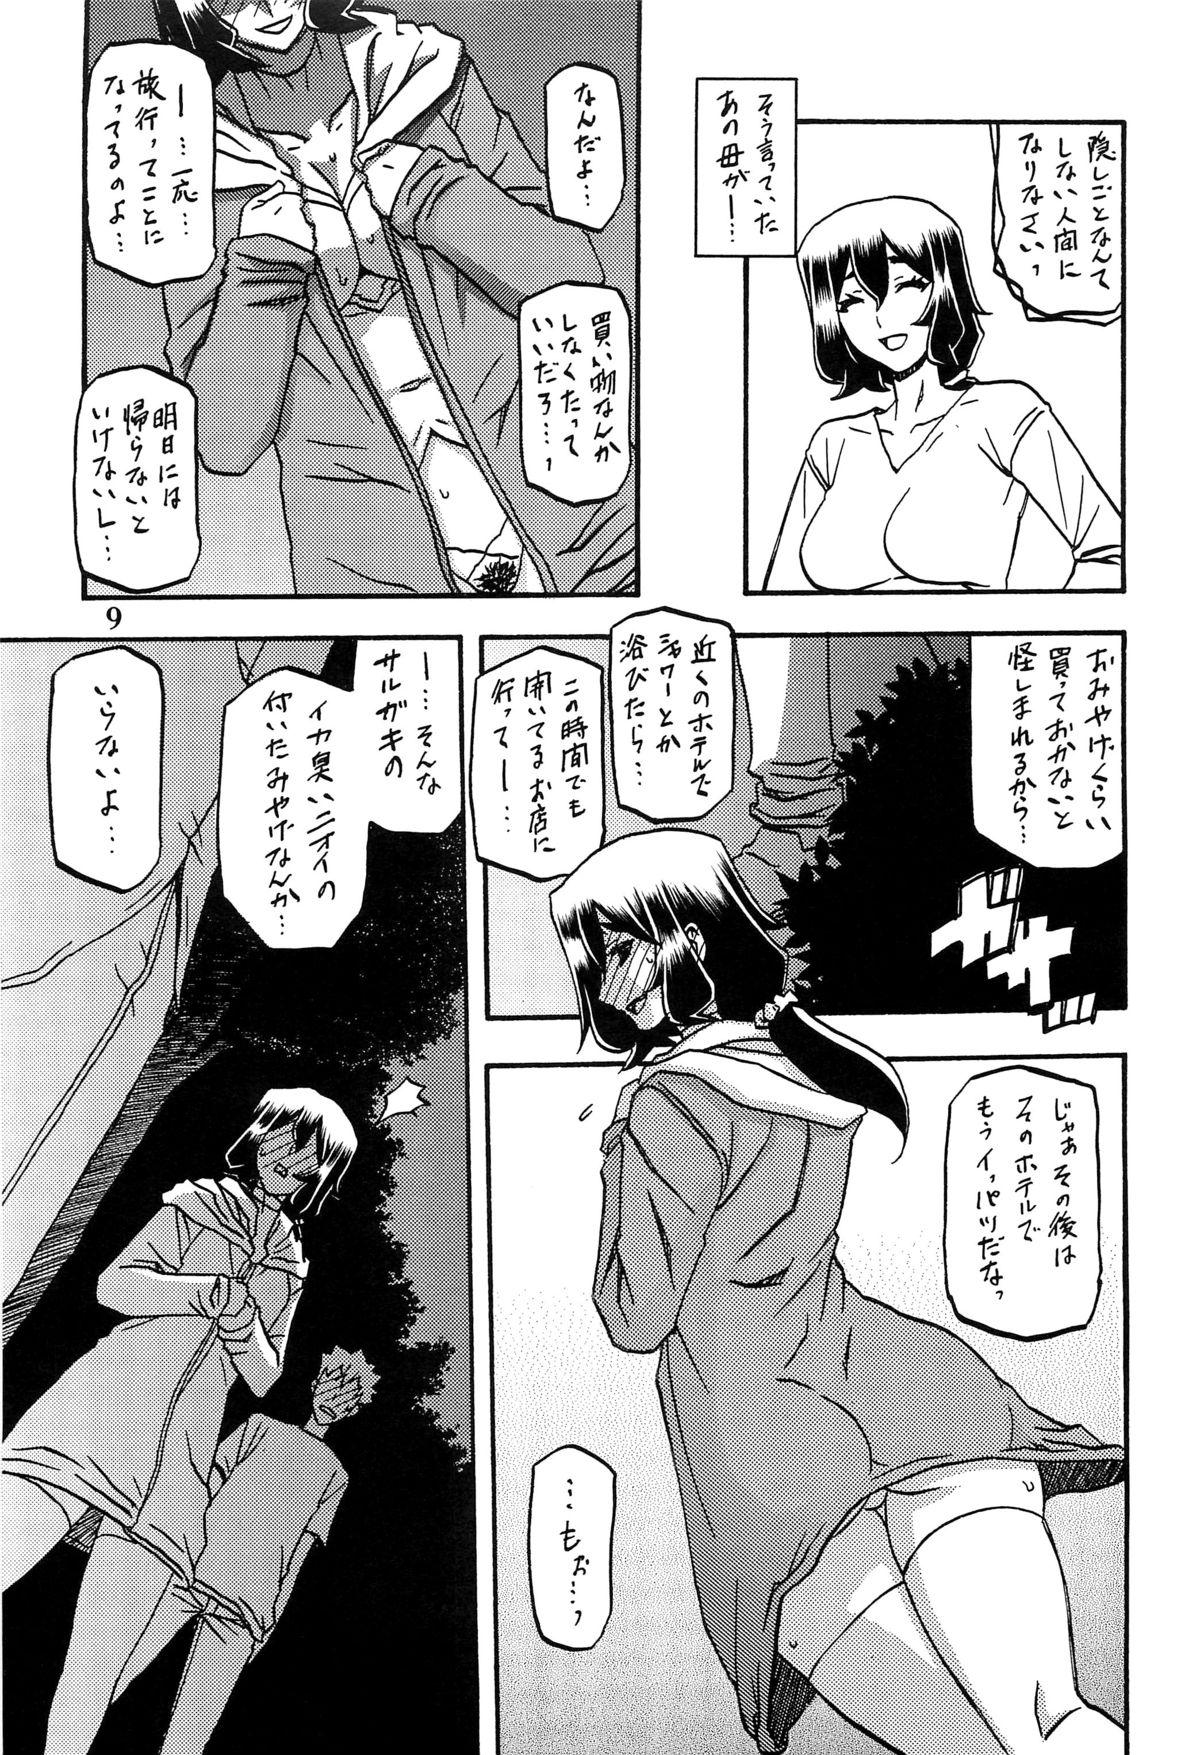 Dirty Akebi no Mi - Chizuru AFTER Straight - Page 8